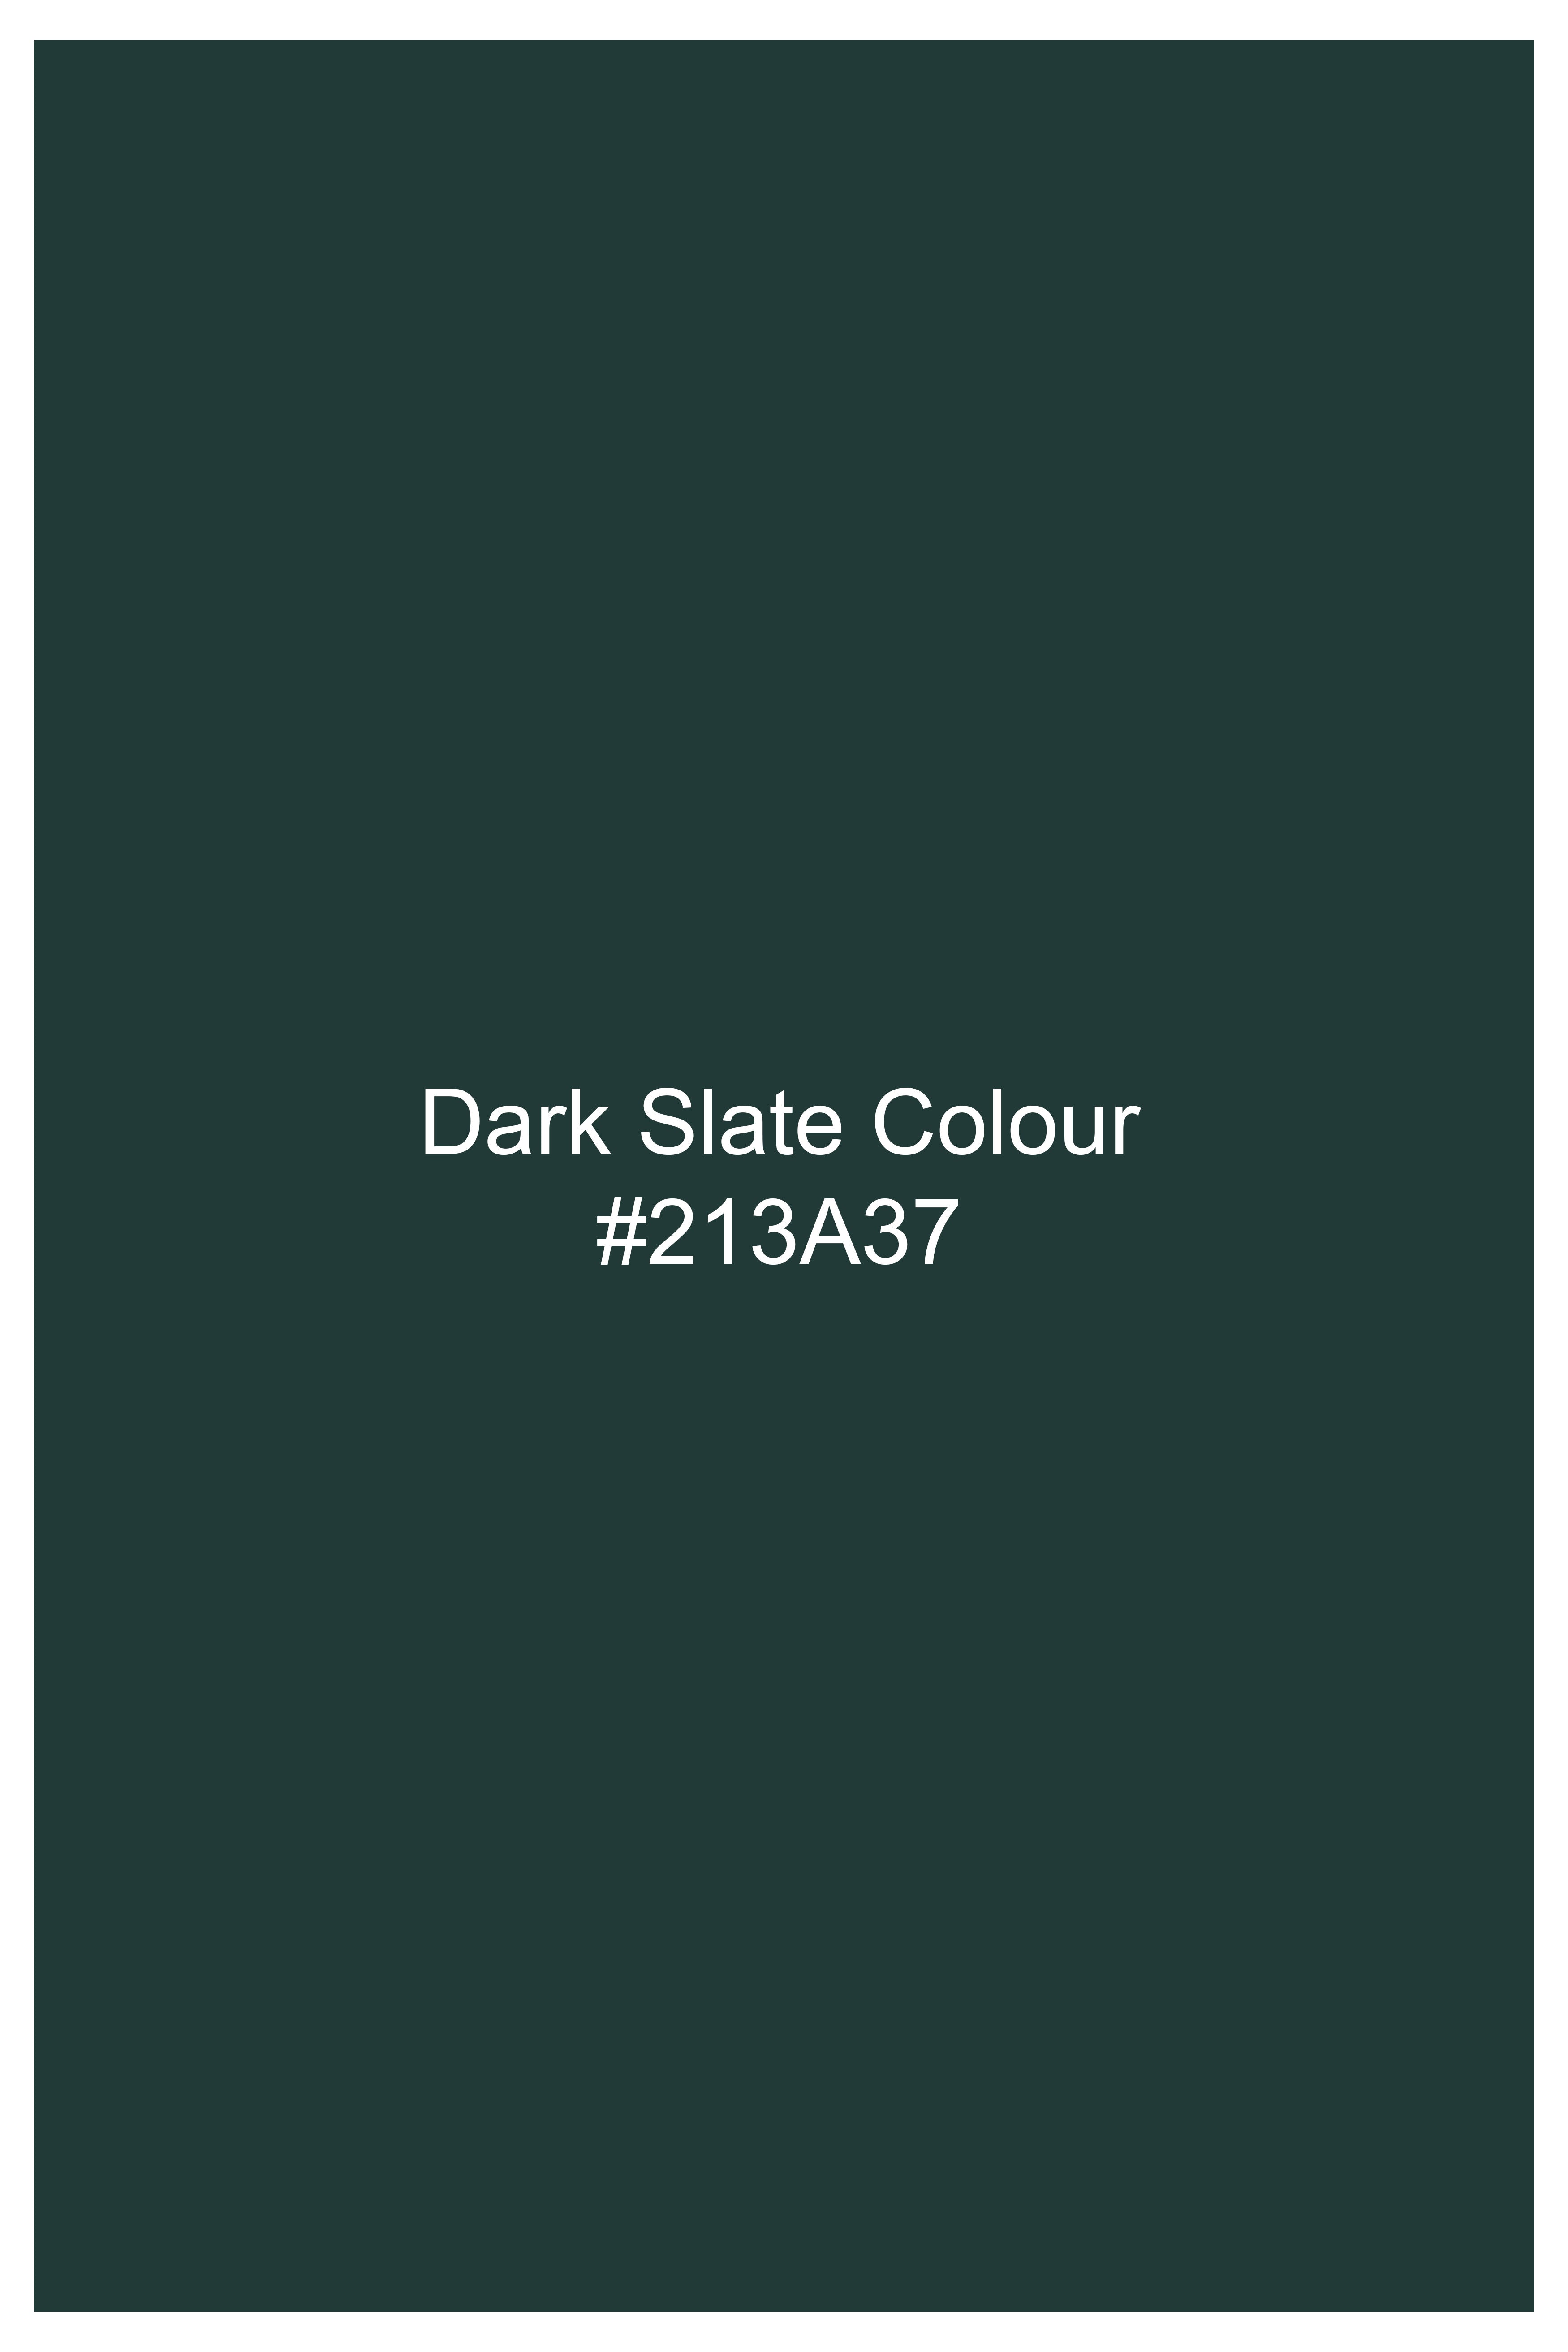 Dark Slate Green Premium Cotton Double Breasted Suit ST2739-DB-36, ST2739-DB-38, ST2739-DB-40, ST2739-DB-42, ST2739-DB-44, ST2739-DB-46, ST2739-DB-48, ST2739-DB-50, ST2739-DB-52, ST2739-DB-54, ST2739-DB-56, ST2739-DB-58, ST2739-DB-60